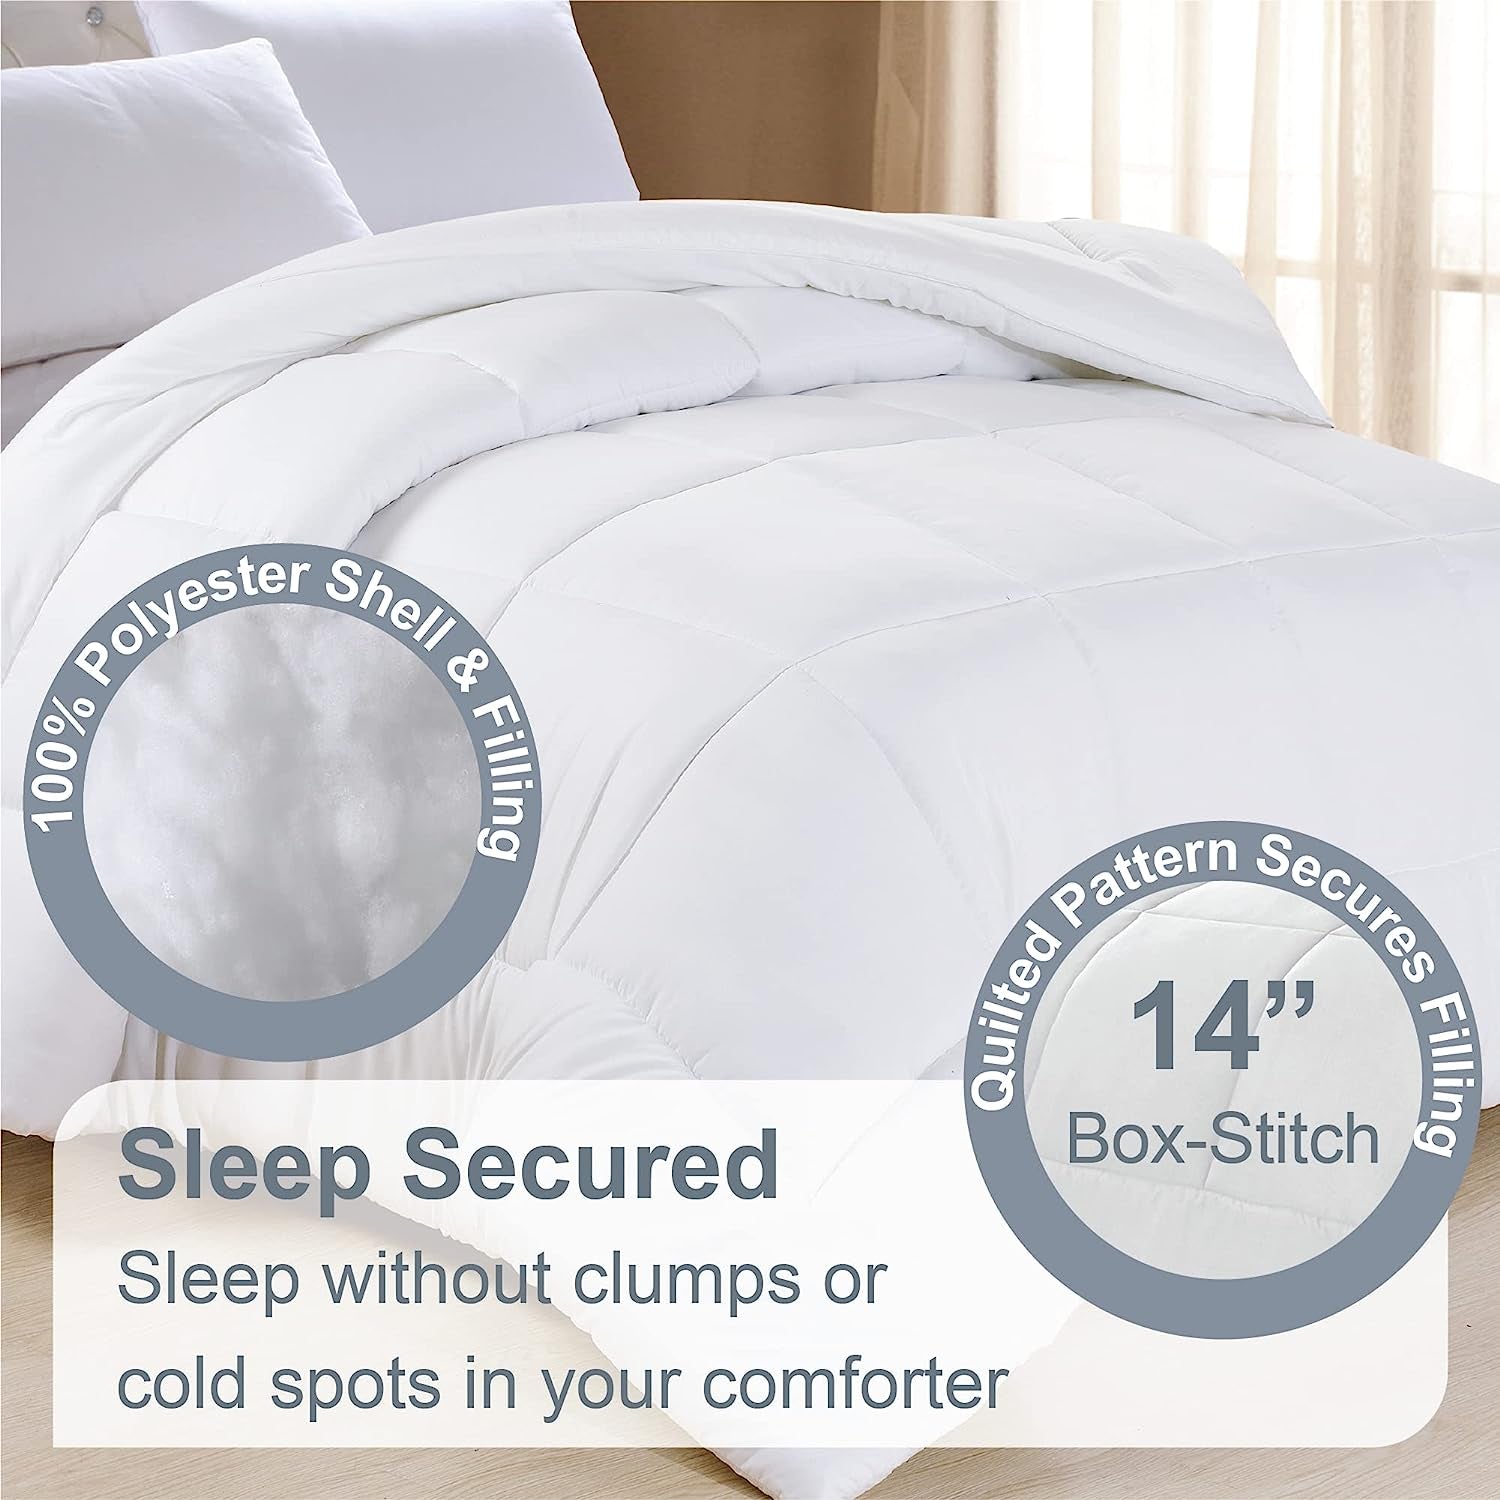 Full Comforter - Lightweight & Extra Soft down Alternative Bedding - All-Season Comfortable Bed Comforter - Wrinkle Fade Stain Resistant - White, Full